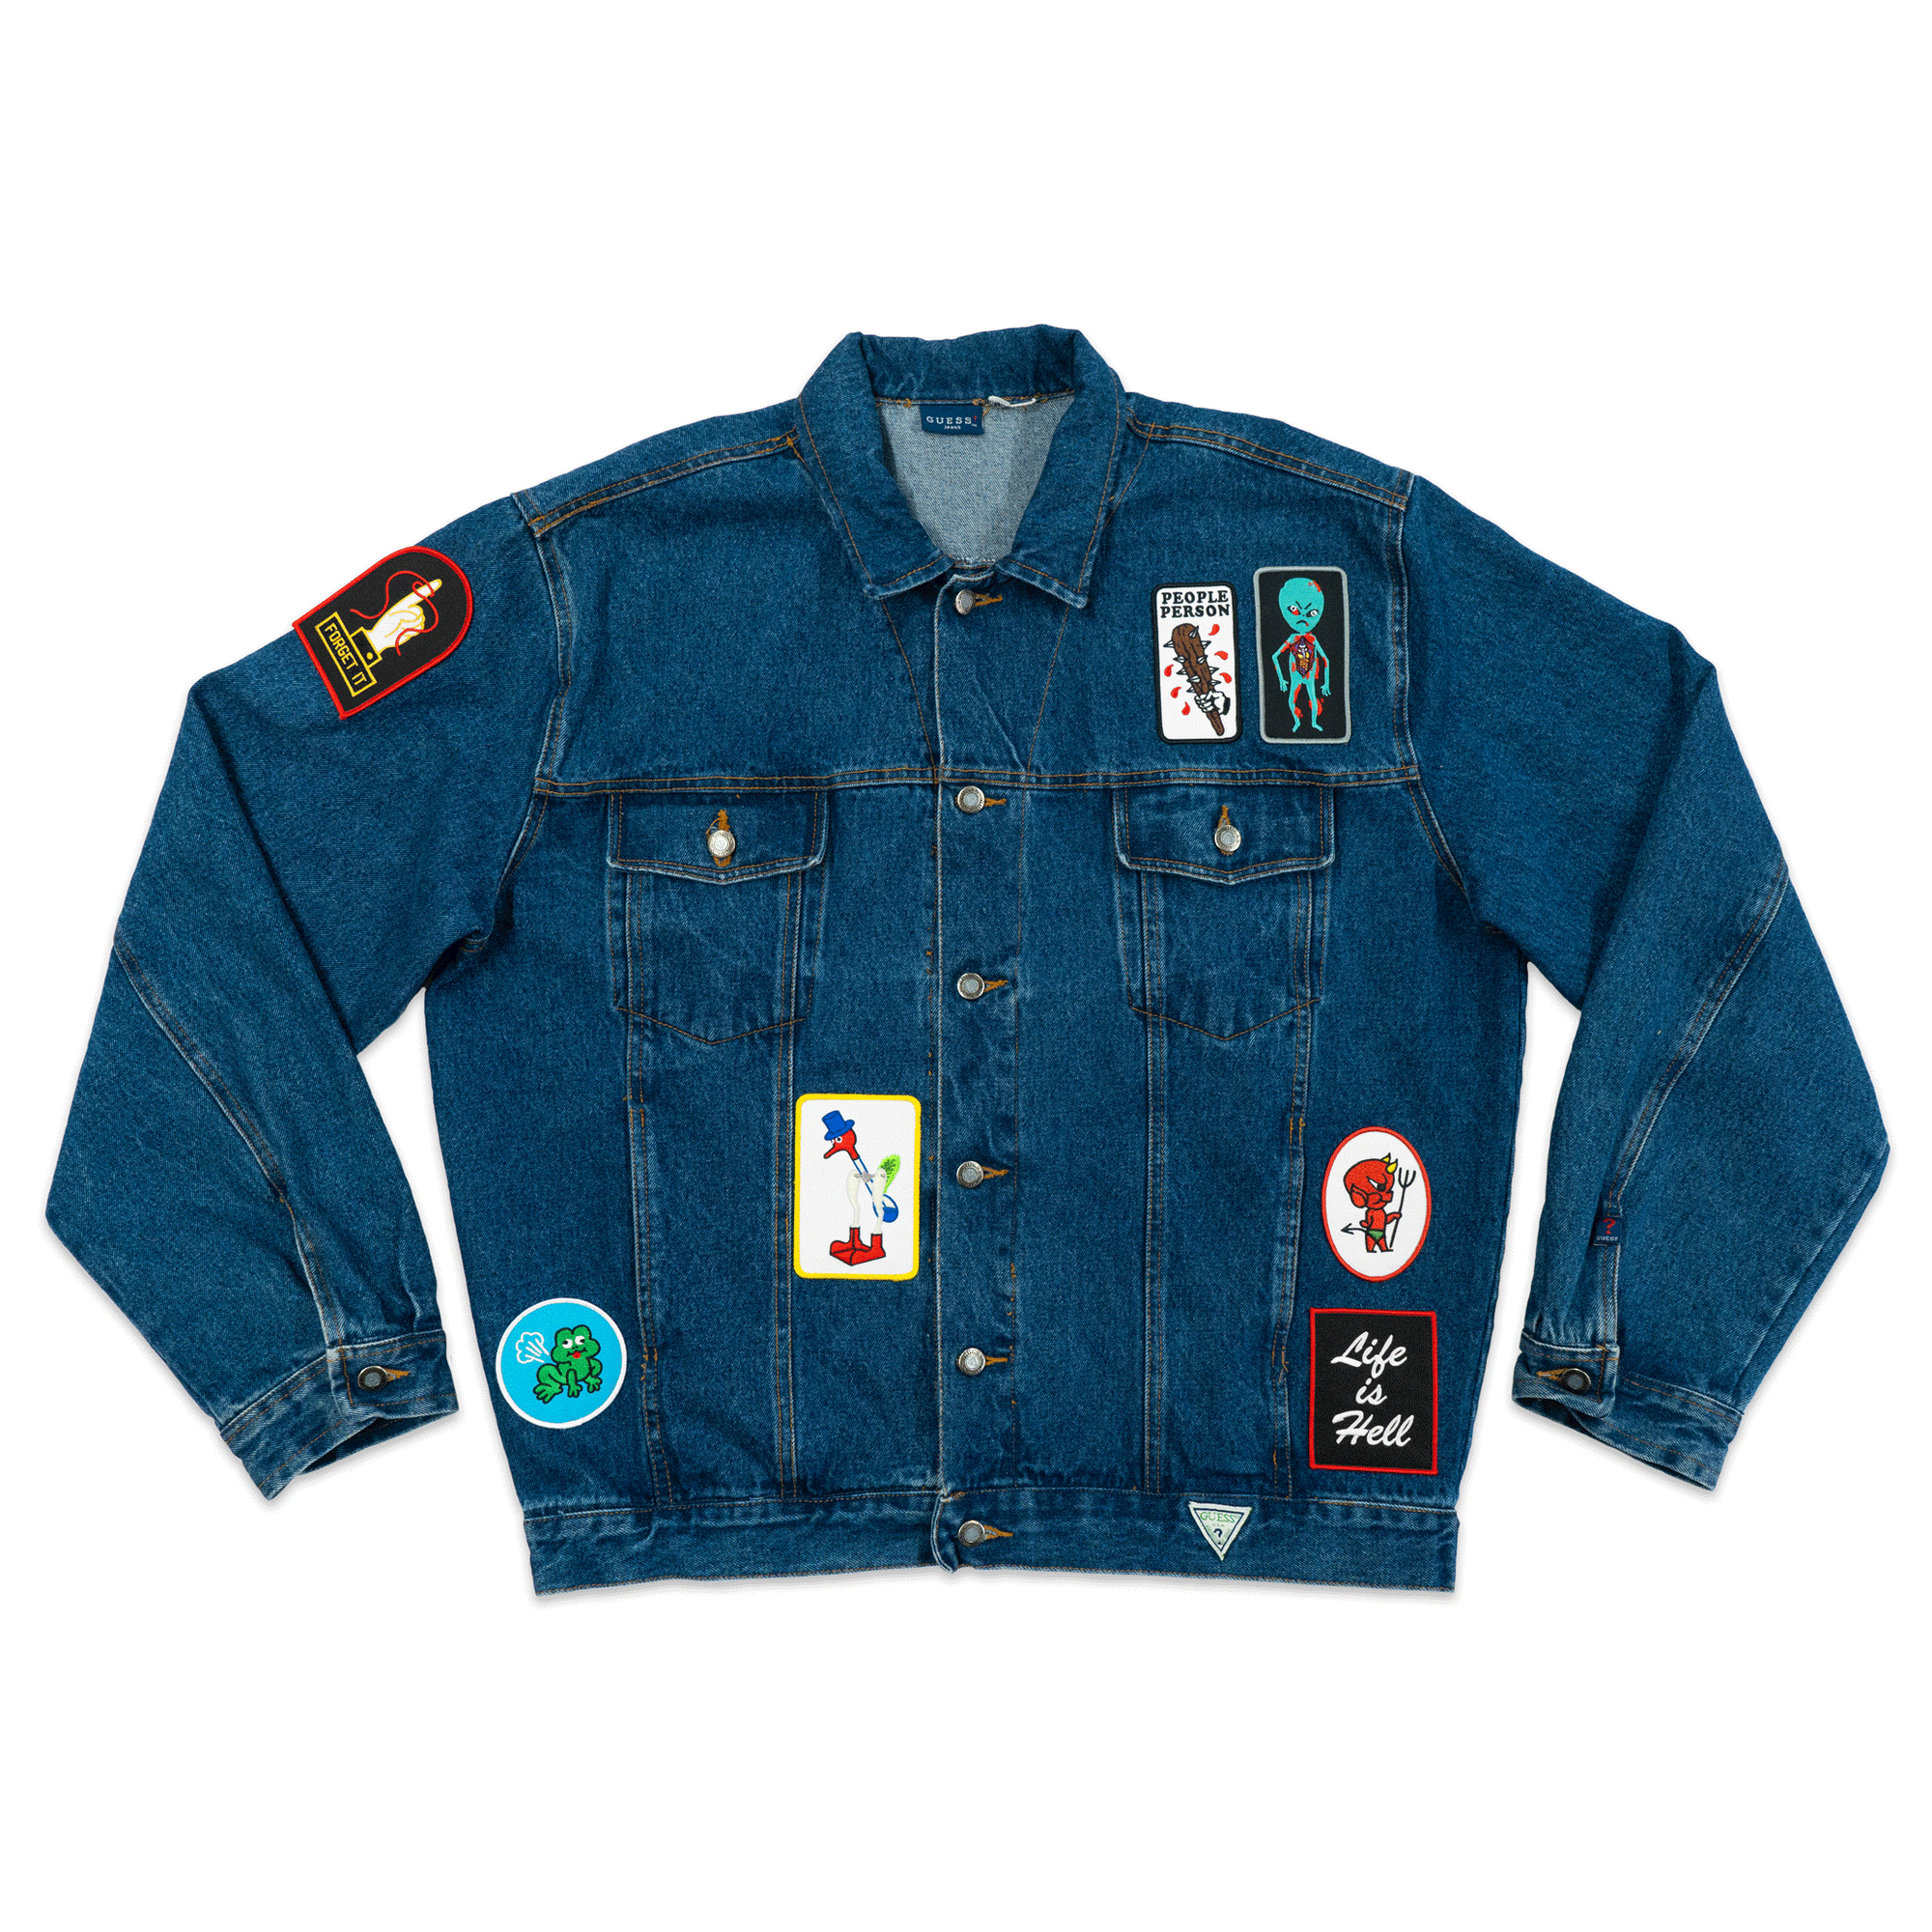 Patched Vintage Denim Jacket - Studio Sample - Size XXL